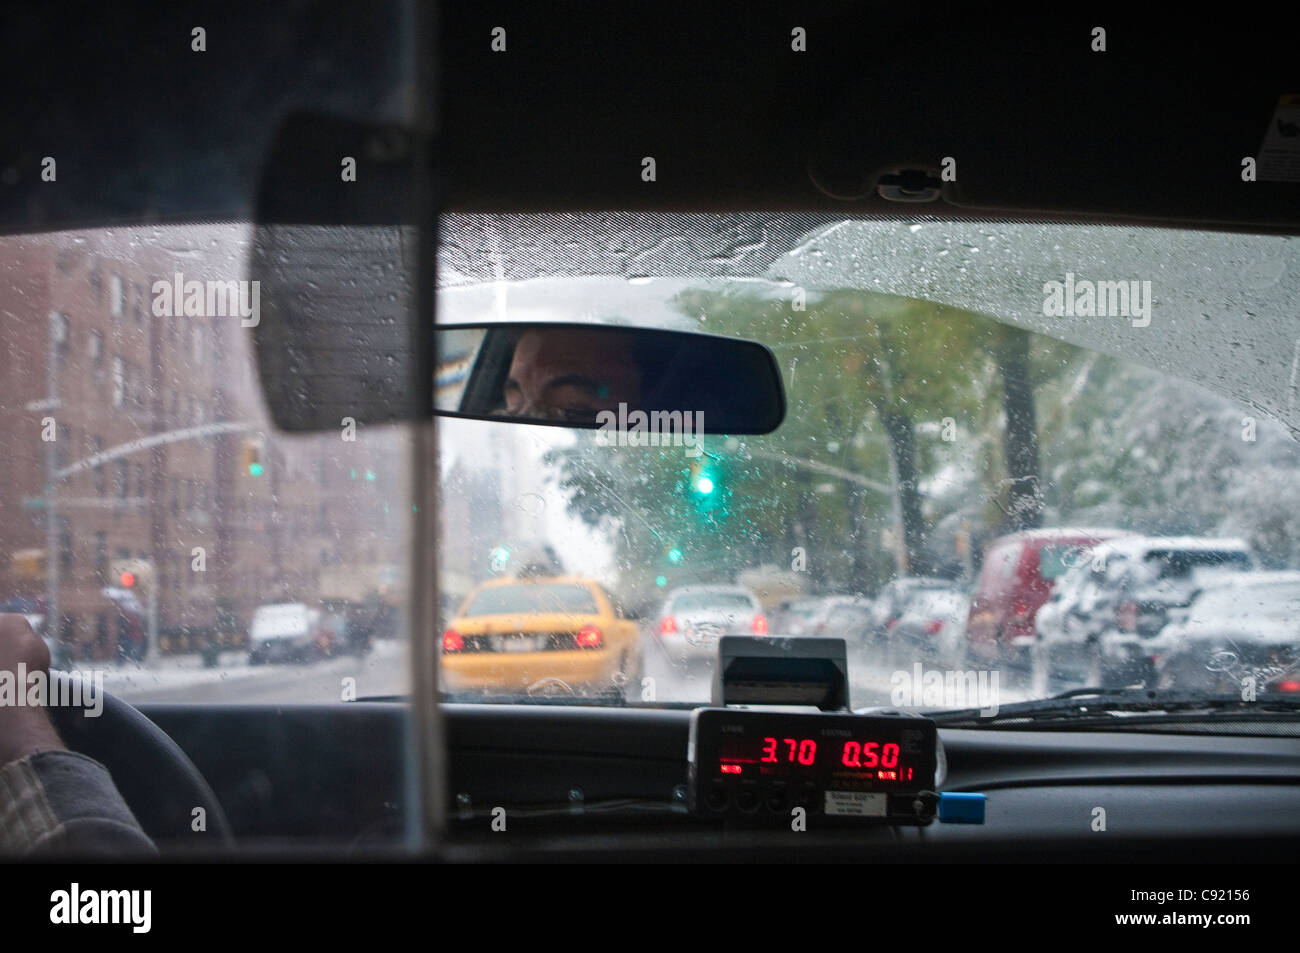 NYC taxi cab interior meter. Stock Photo